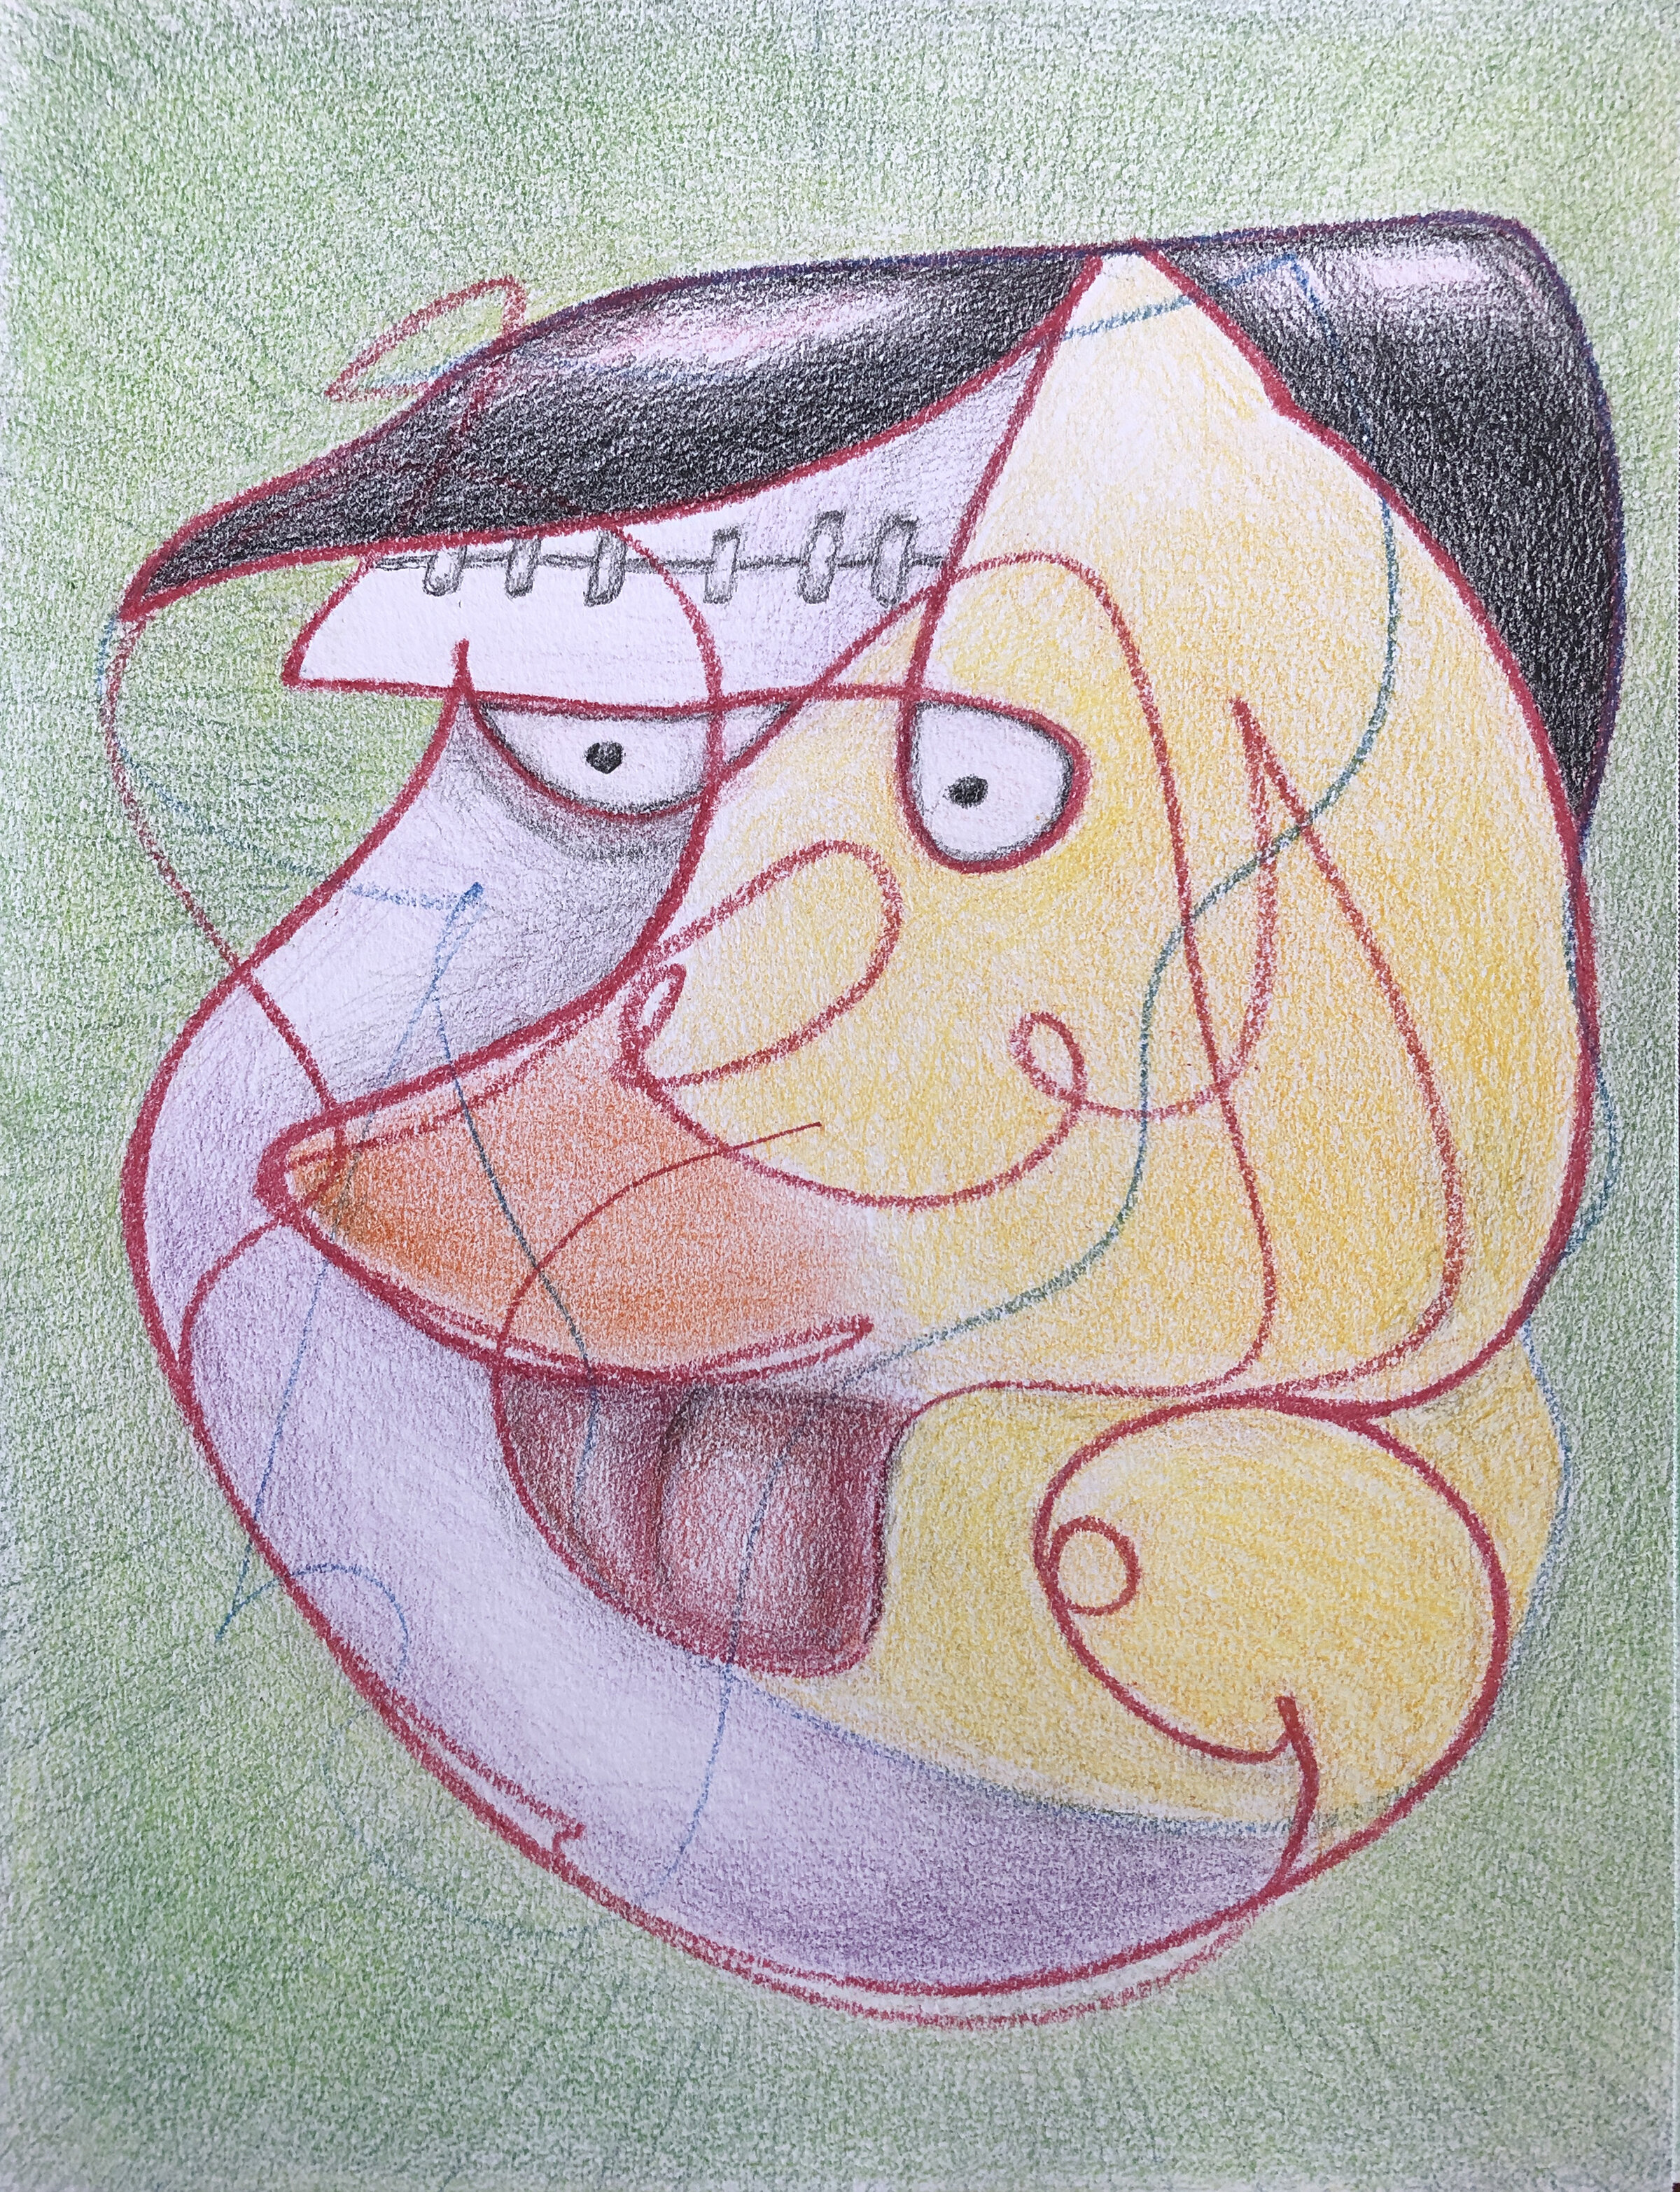 "Duckenstein" 9" x12" Colored Pencil on Paper